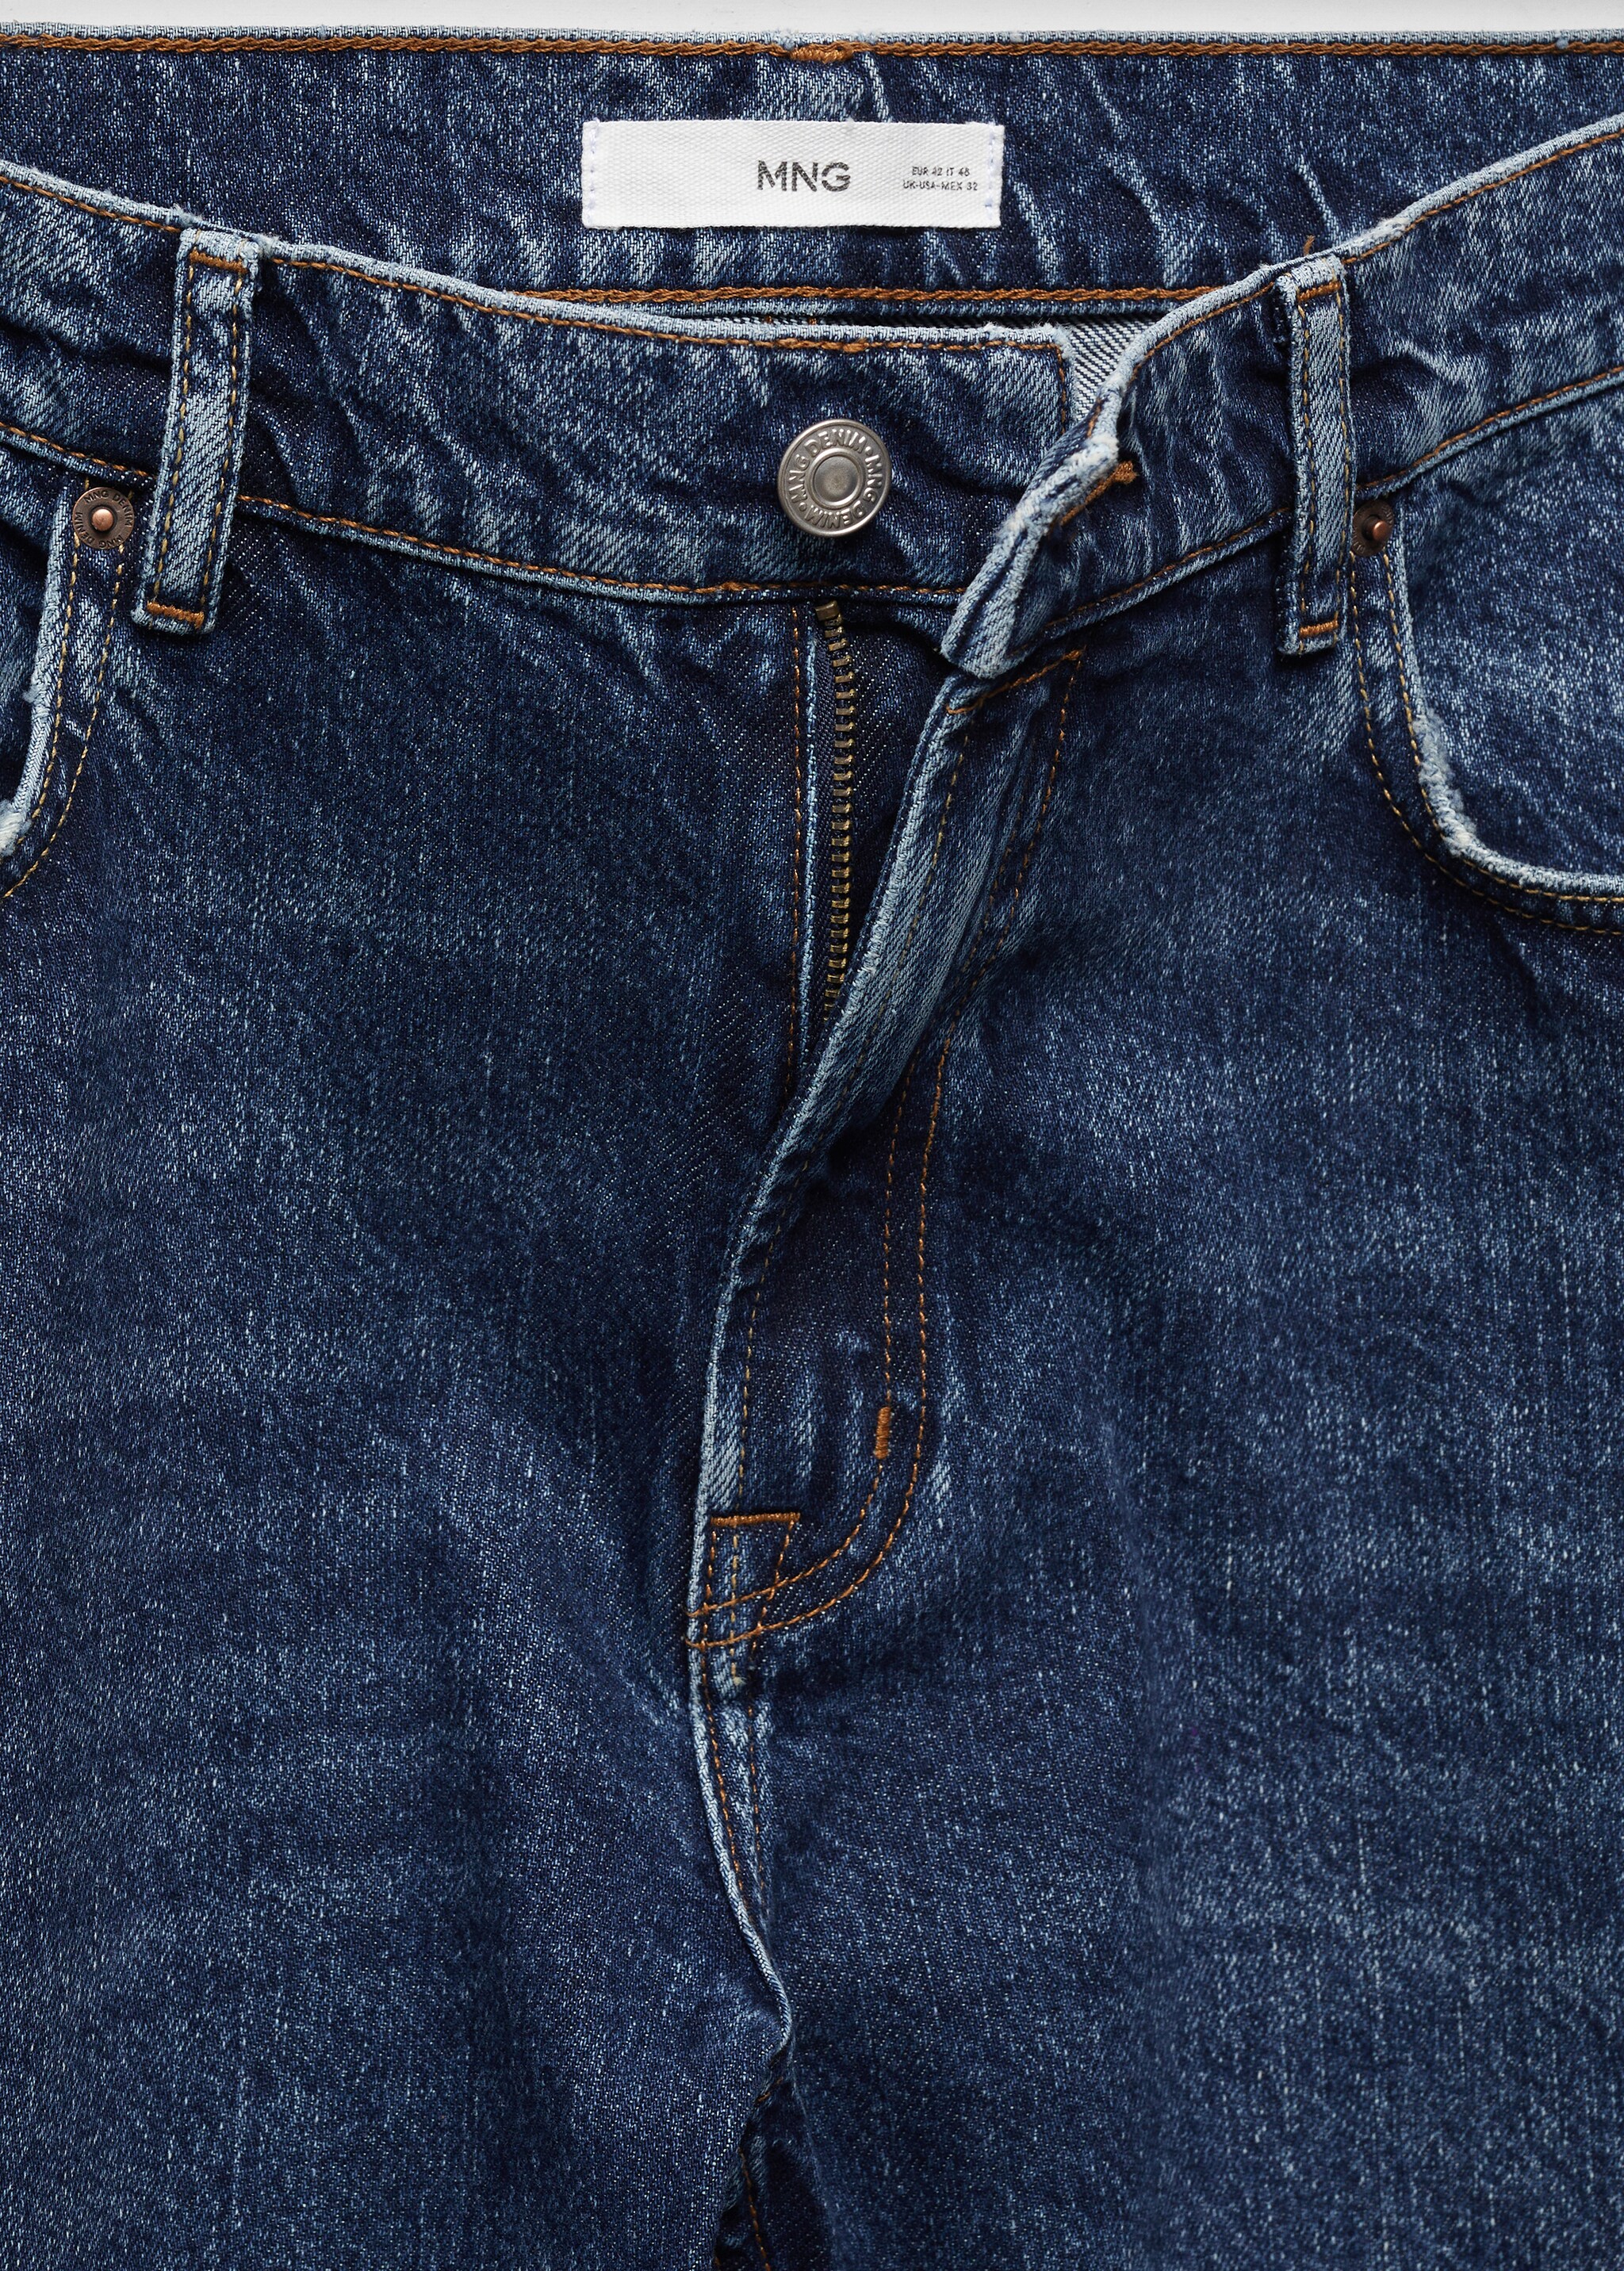 Regular fit dark wash jeans - Details of the article 8